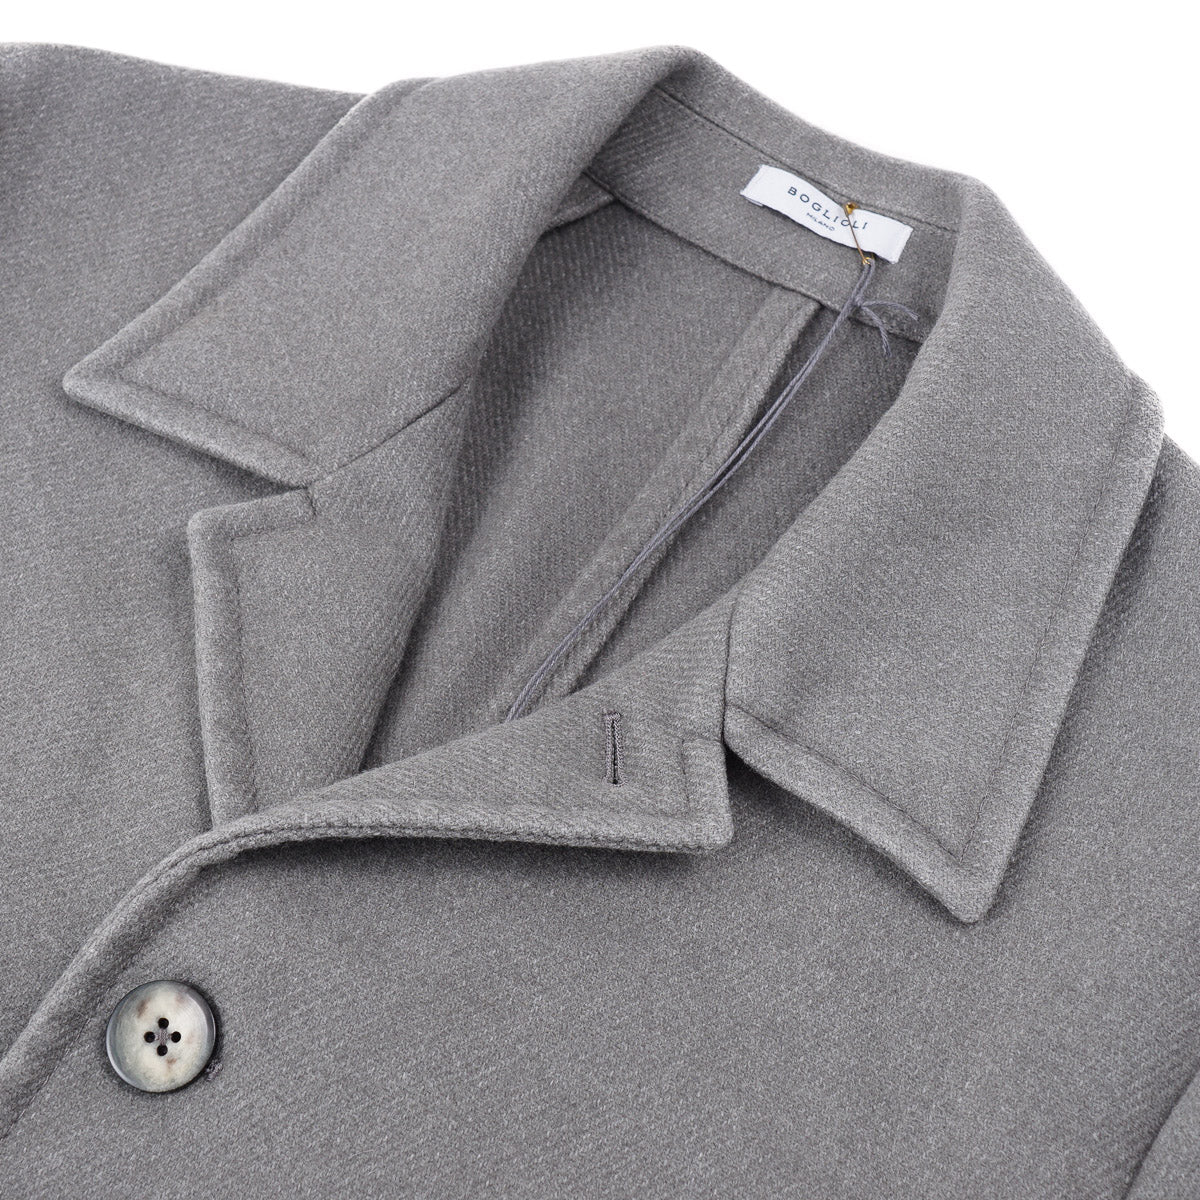 Boglioli Garment-Washed Wool Overcoat - Top Shelf Apparel